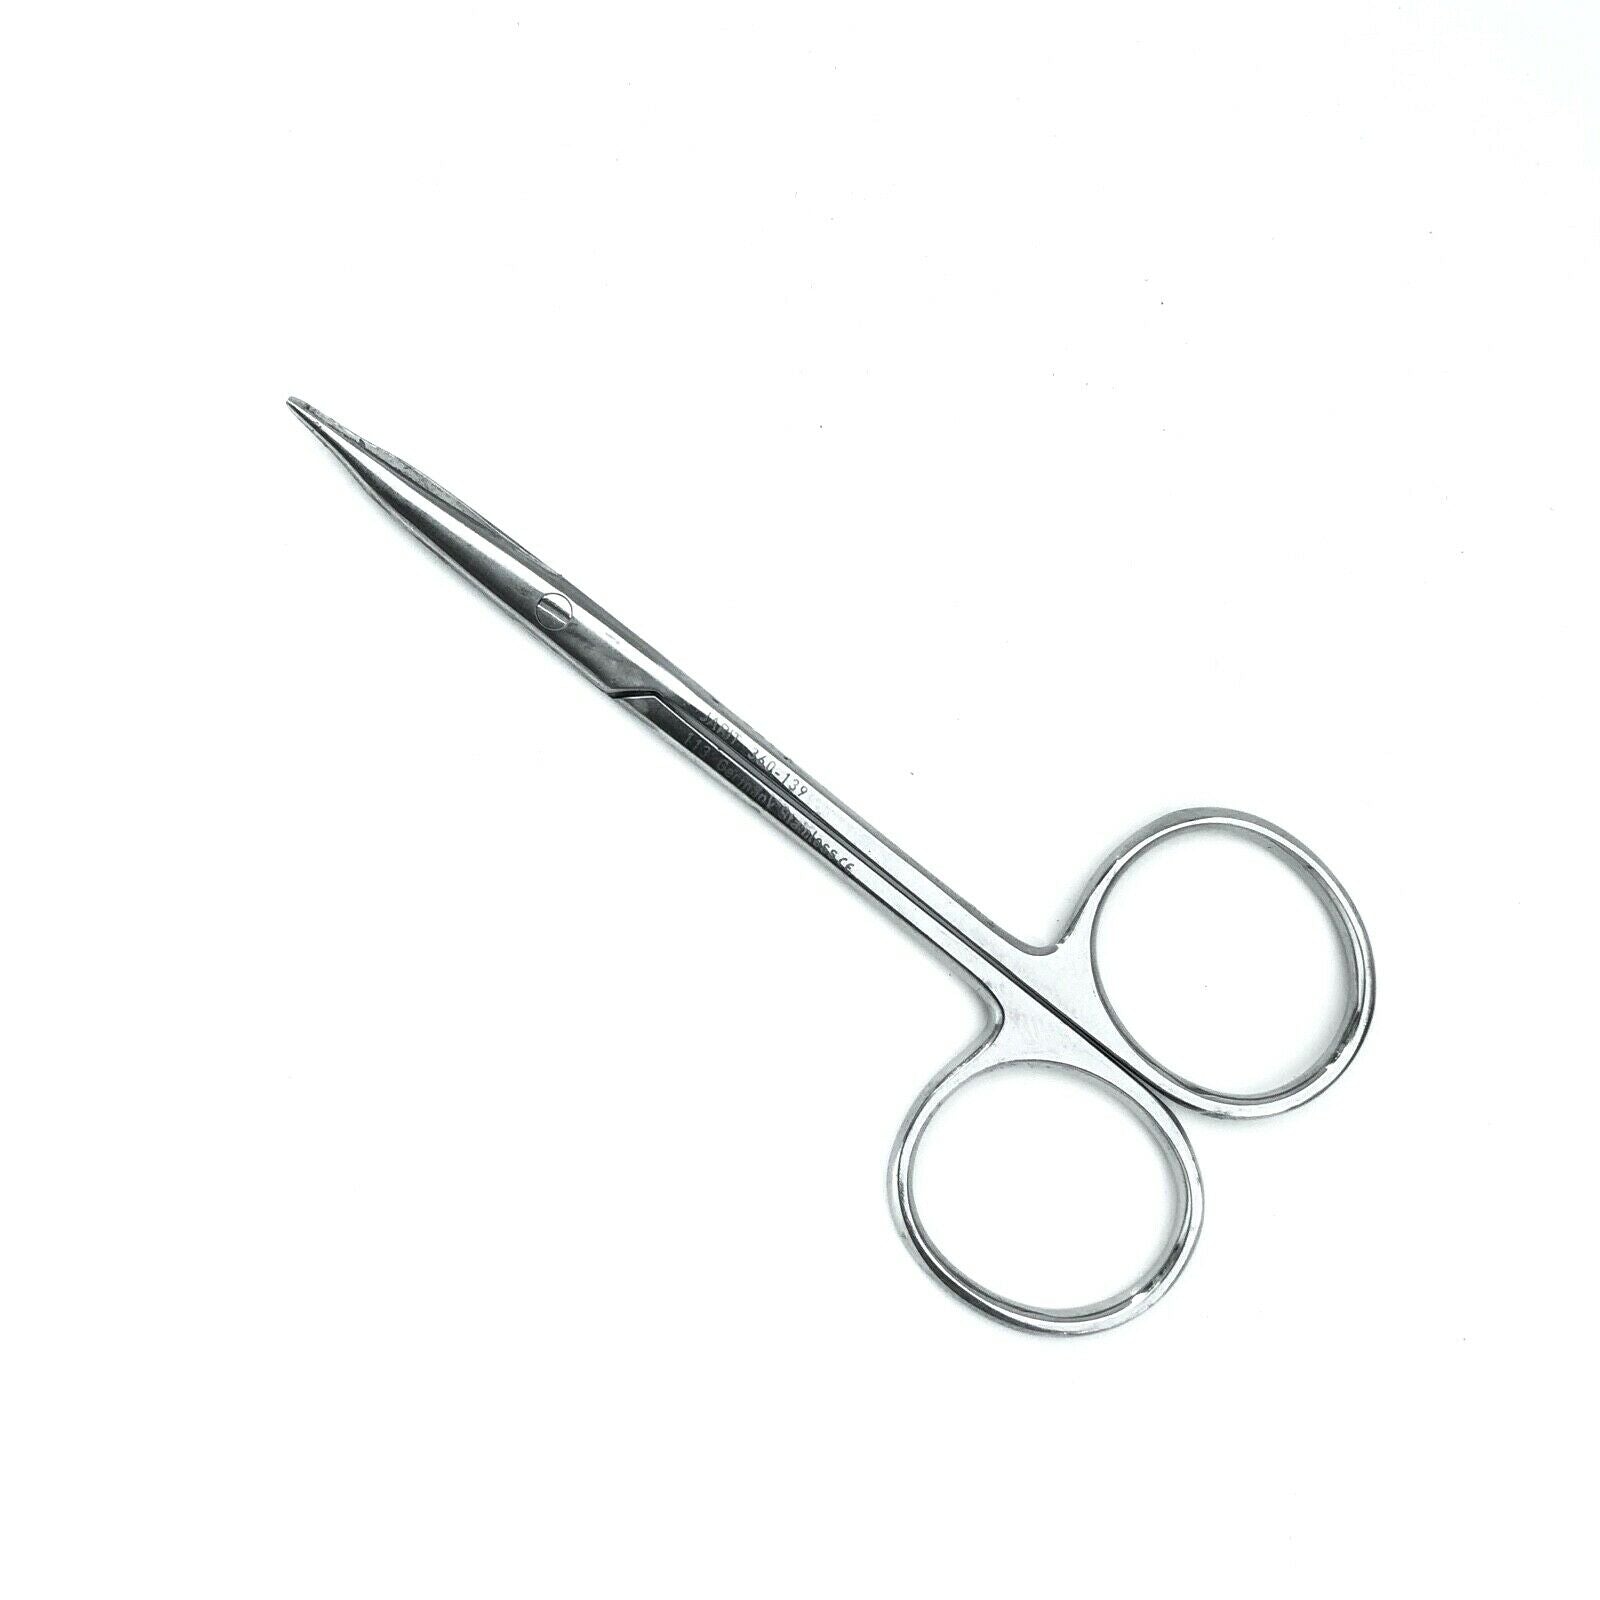 Jarit 360-139 Stevens Tenotomy Curved Scissors, 4-1/2" (DMT362) DIAGNOSTIC ULTRASOUND MACHINES FOR SALE